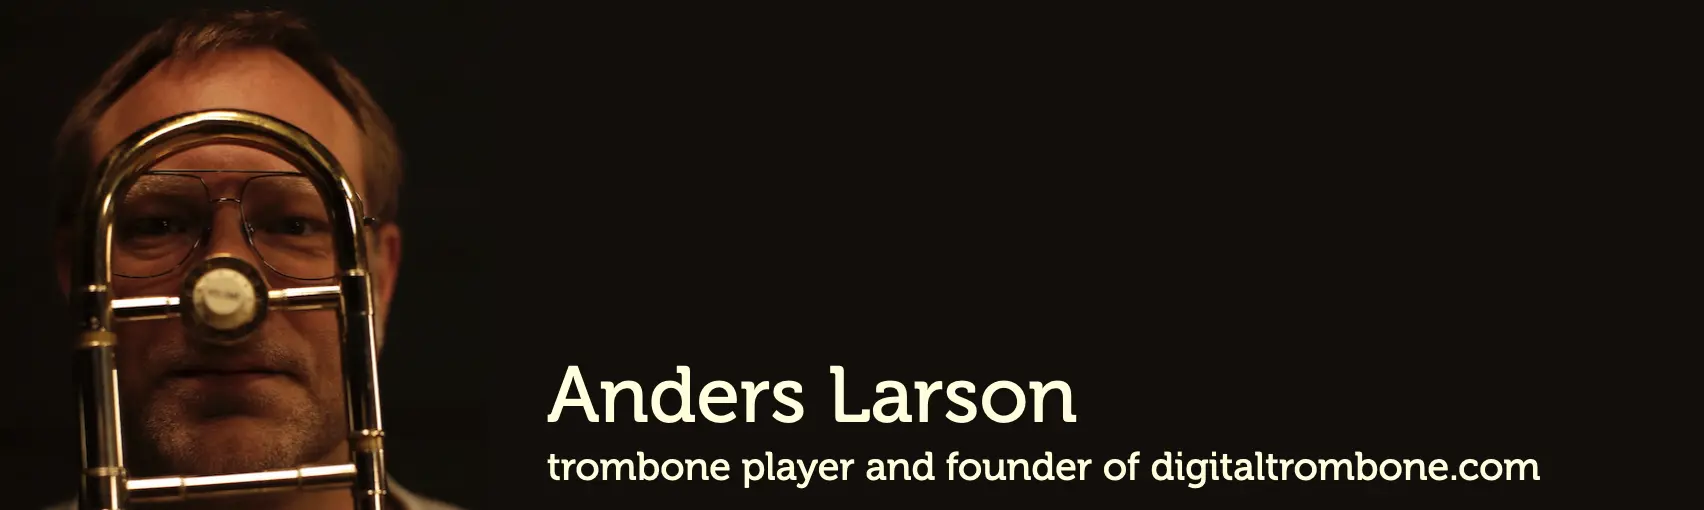 Anders-Larson jazz trombone player and founder of digitaltrombone.com